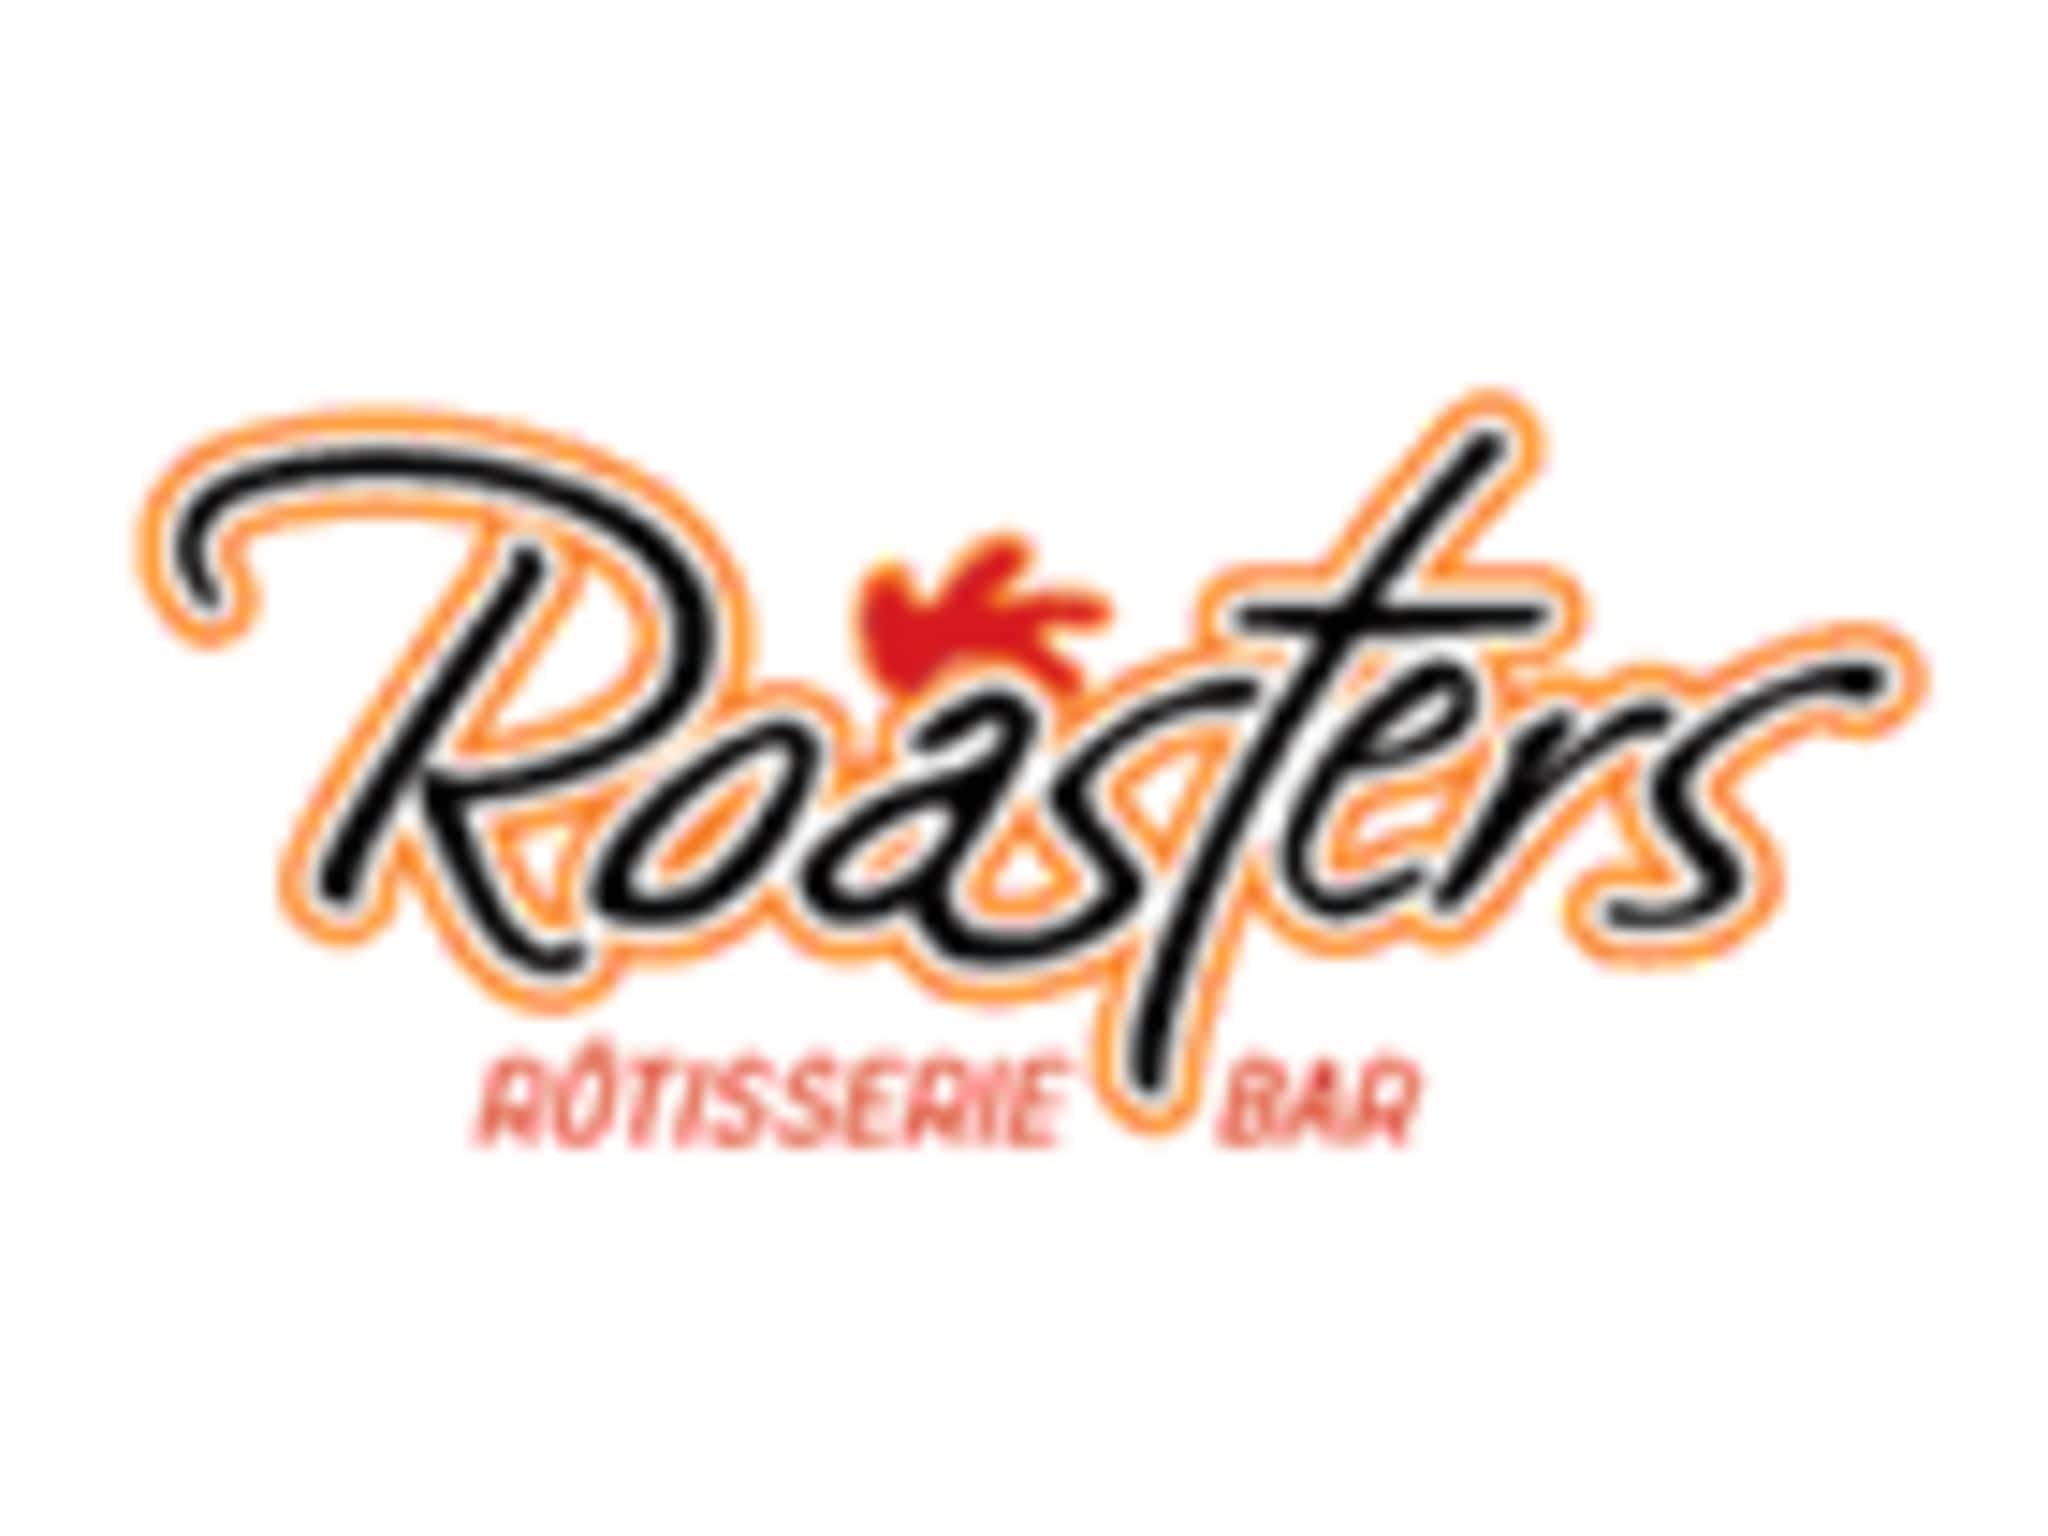 photo Roasters Rotisserie et Bar